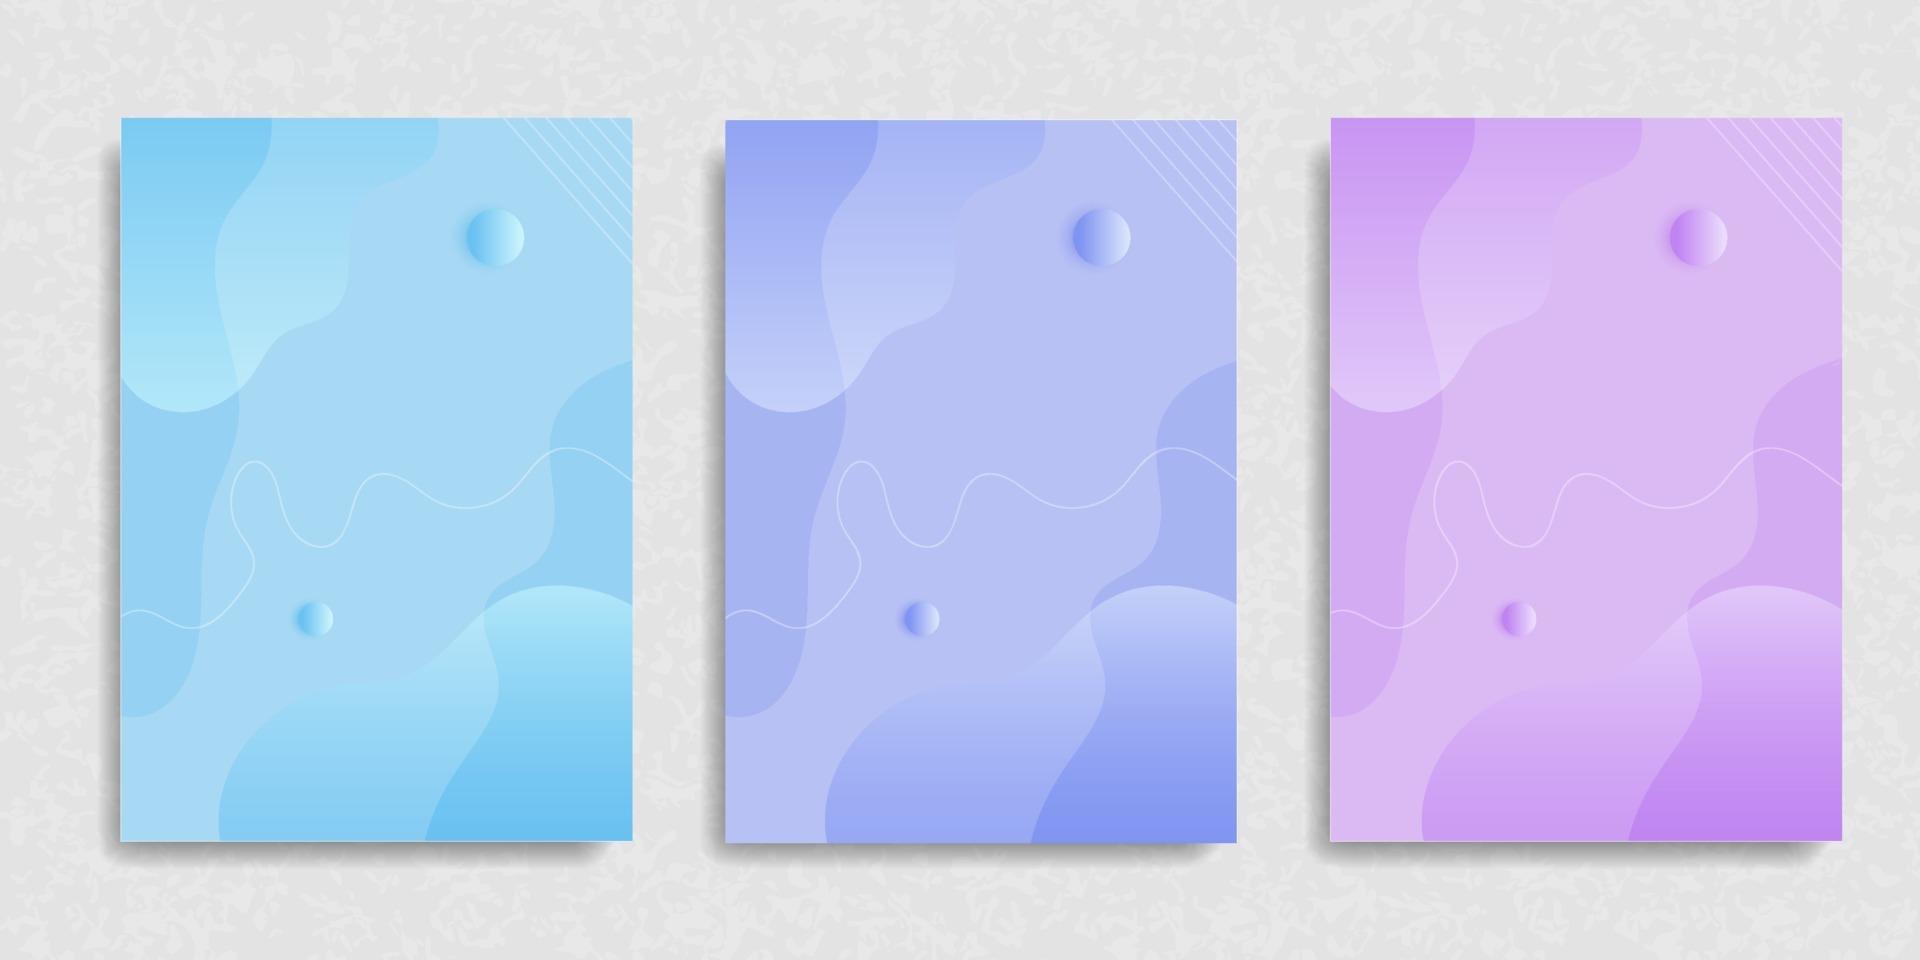 conjunto de fundo ondulado abstrato premium em azul claro, roxo e violeta vetor